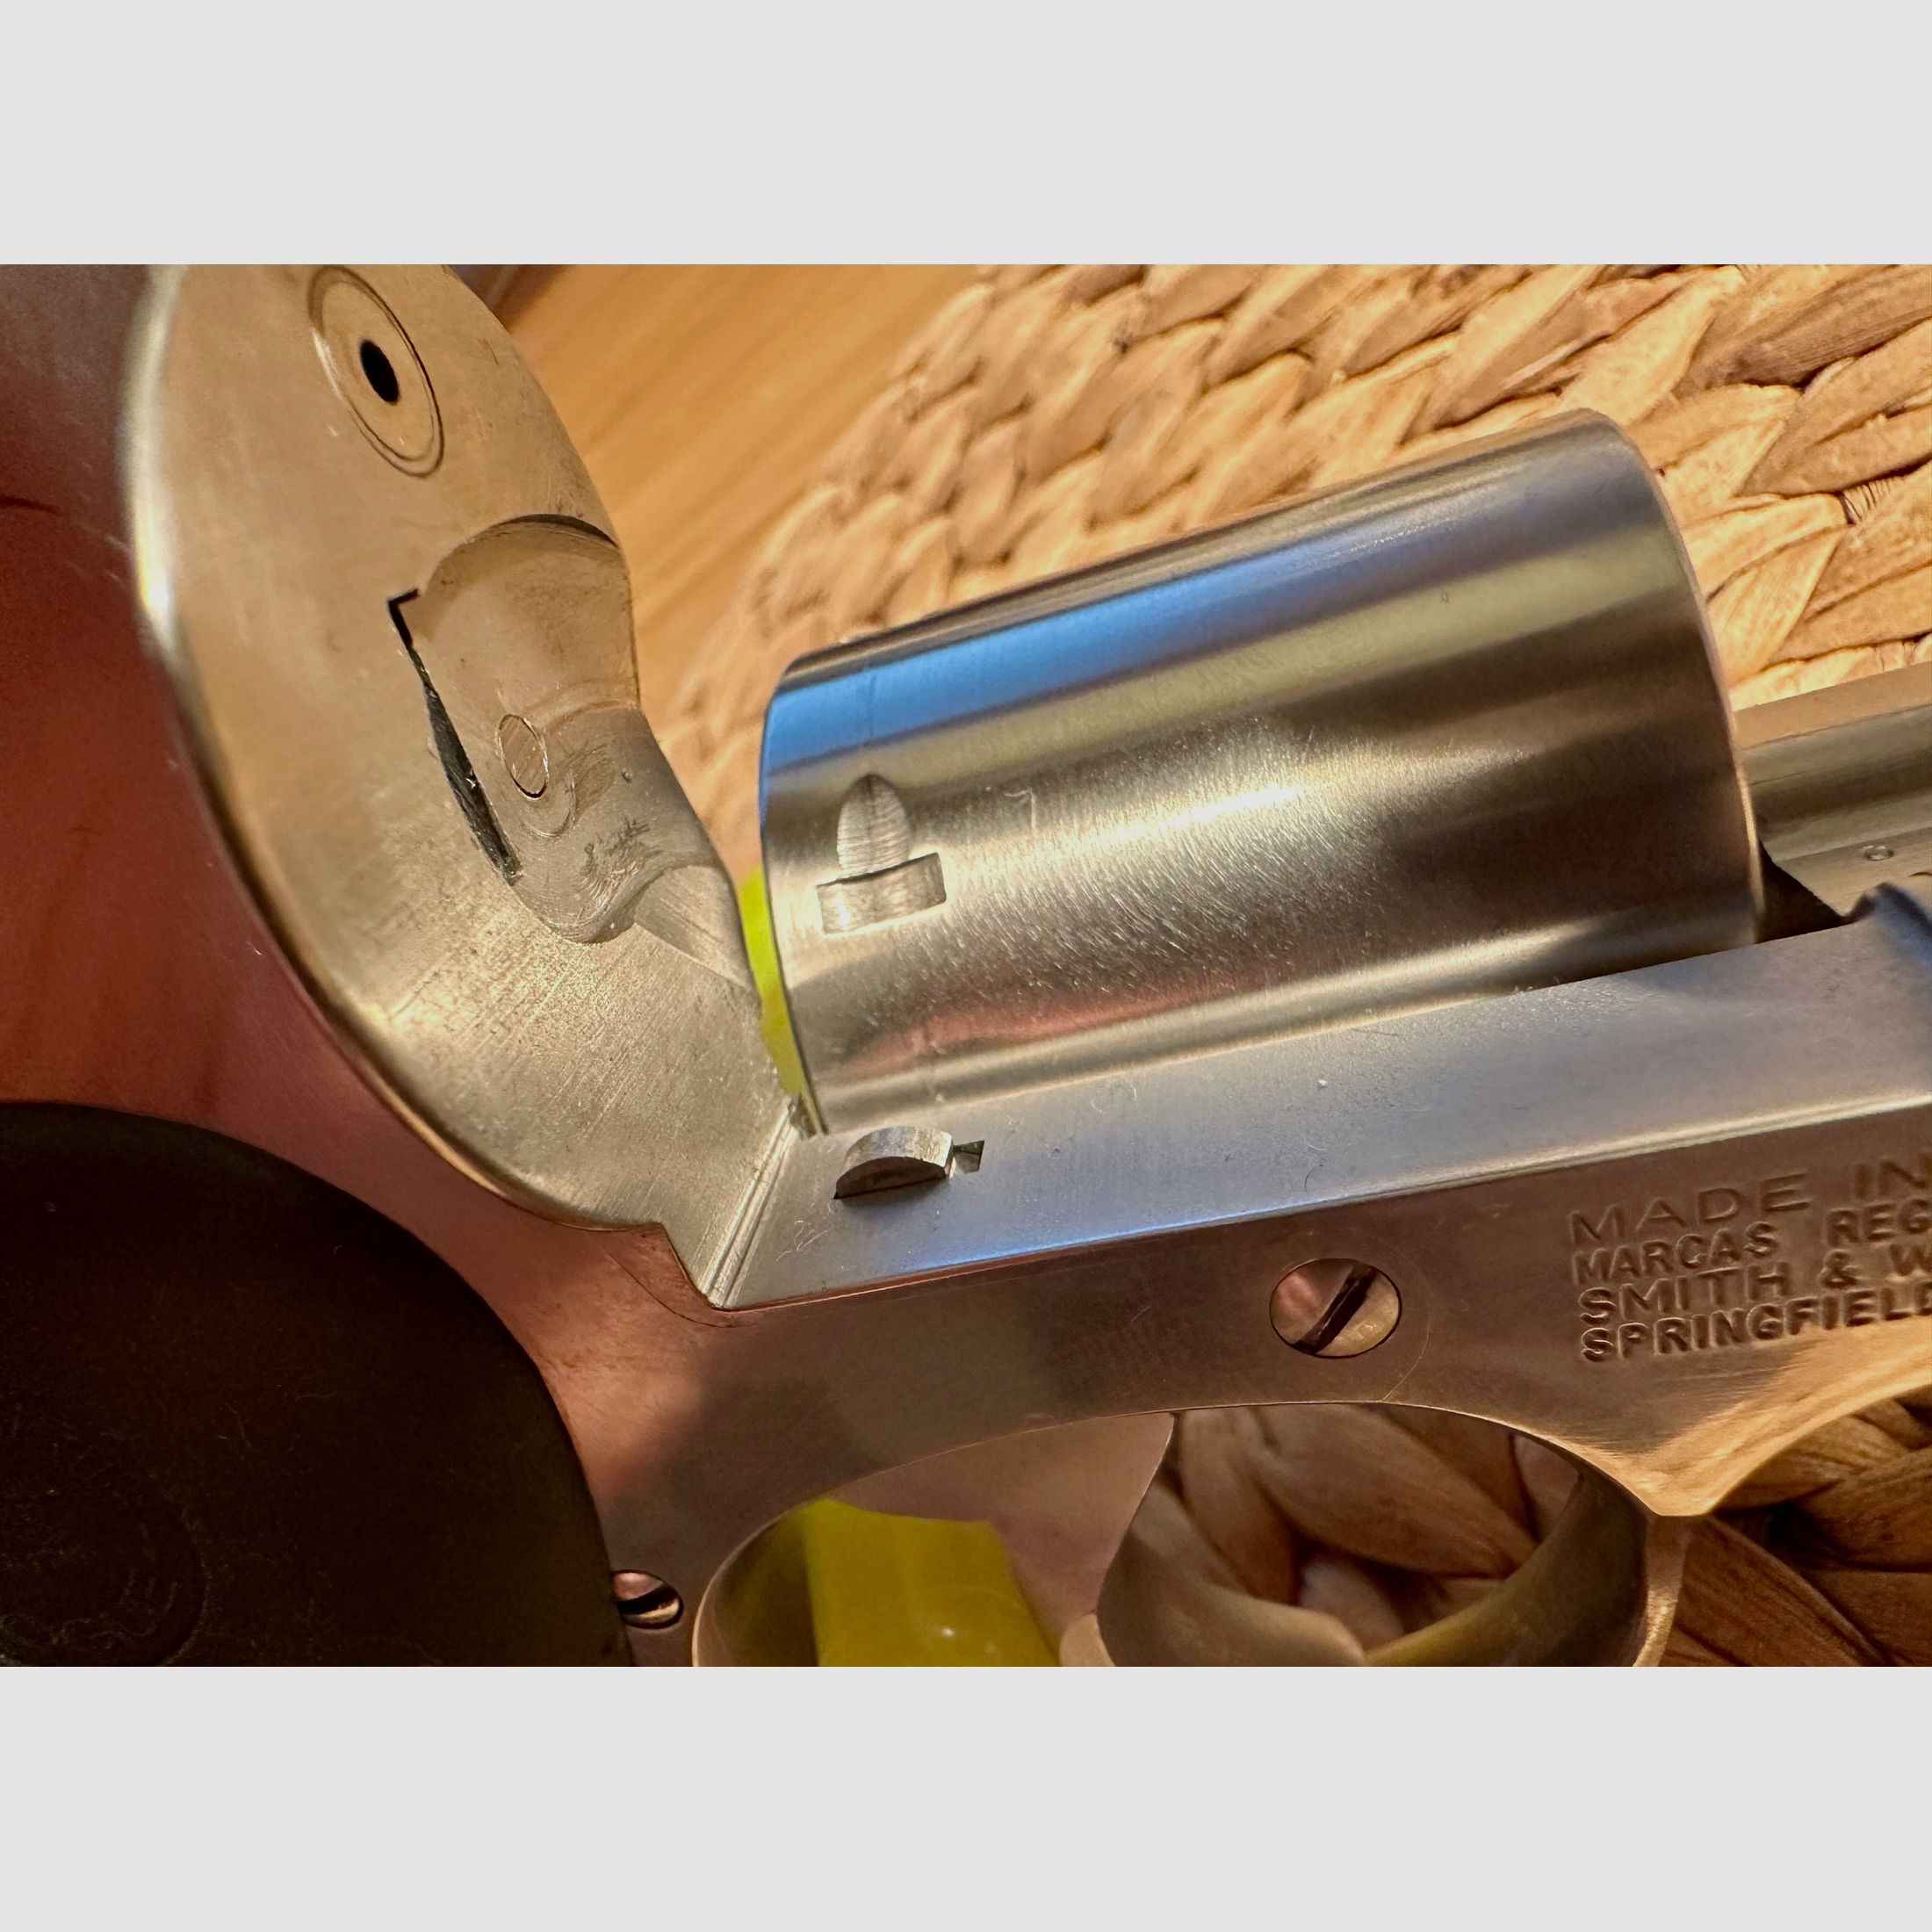 Smith & Wesson 629-2 Classic Magnum 7 1/2" Full Lug .44 Mag. Revolver (No. 420 von 750)